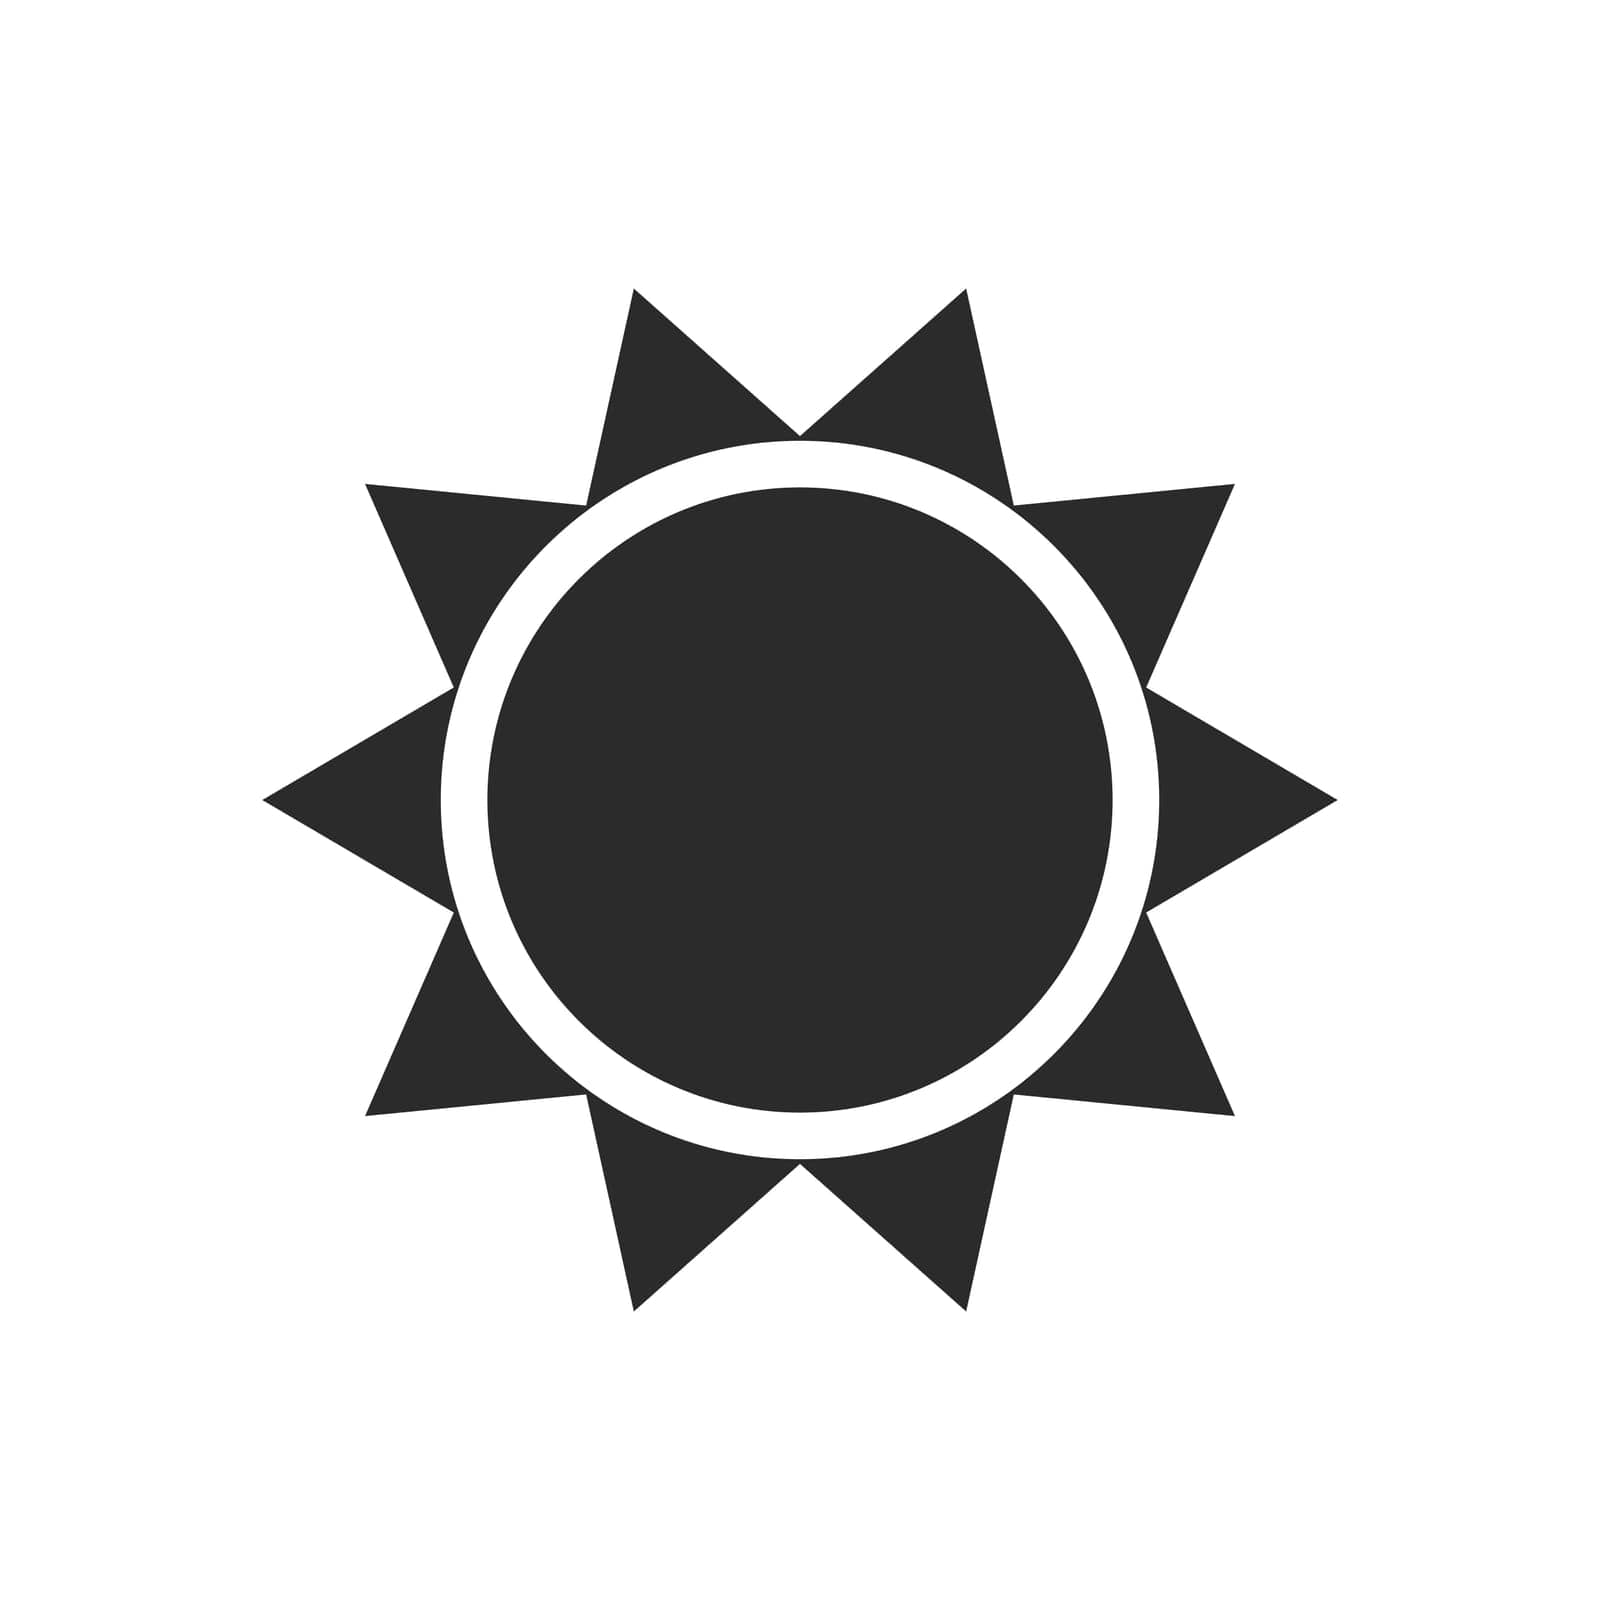 Sun silhouette icons. Summer black circle shape. Nature, sky heat symbol. Vector sunrise image isolated on white background.